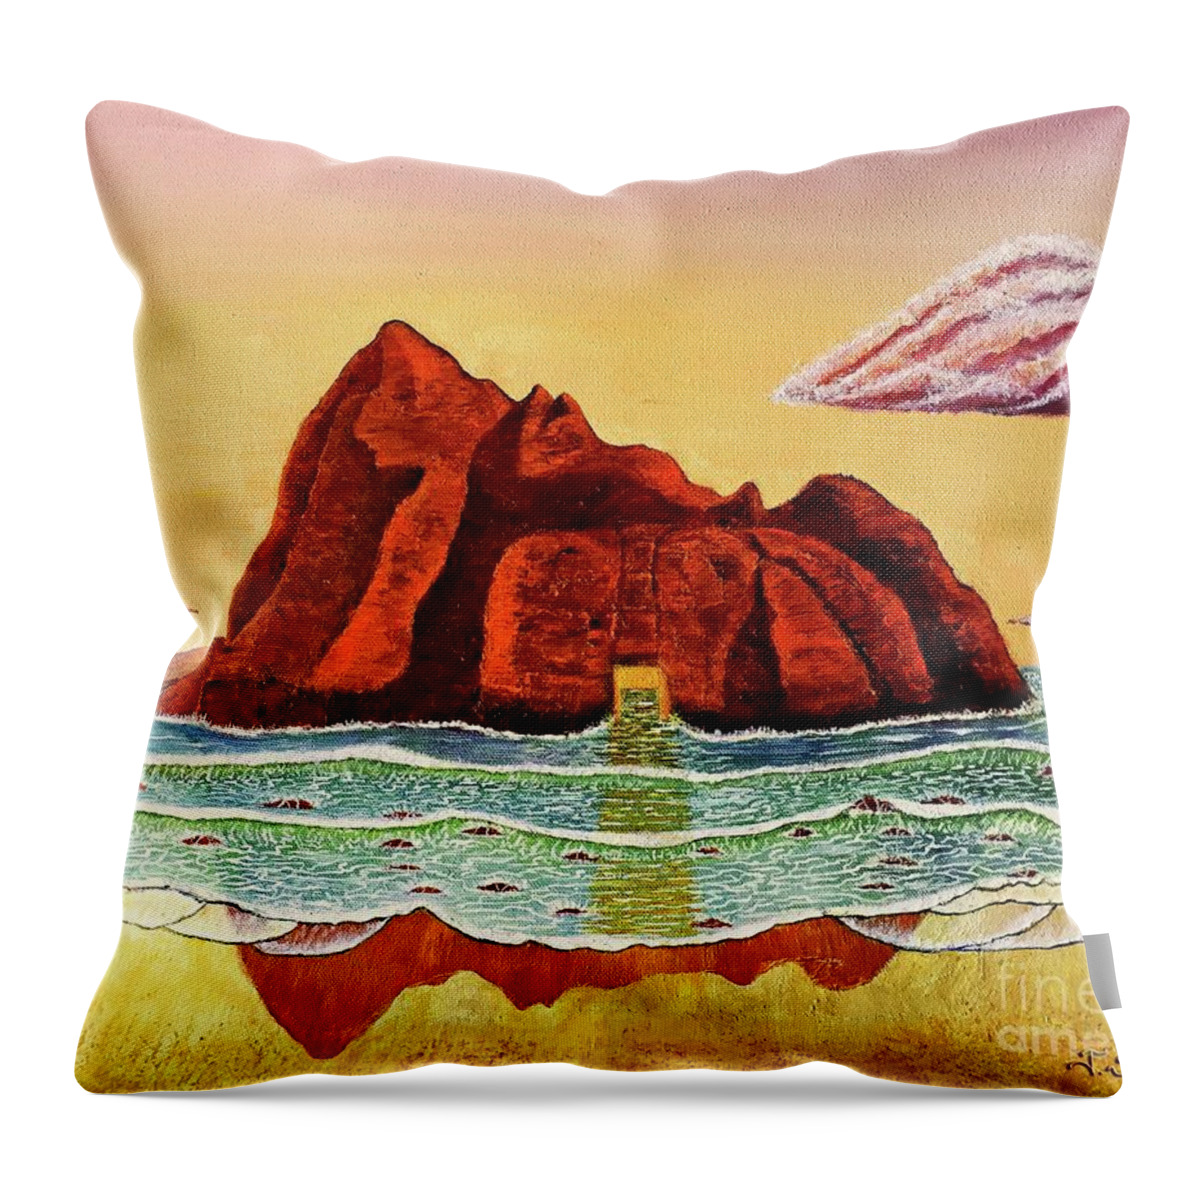 Pfeiffer Beach Throw Pillow featuring the painting Pfeiffer Beach Big Sur by Joseph J Stevens